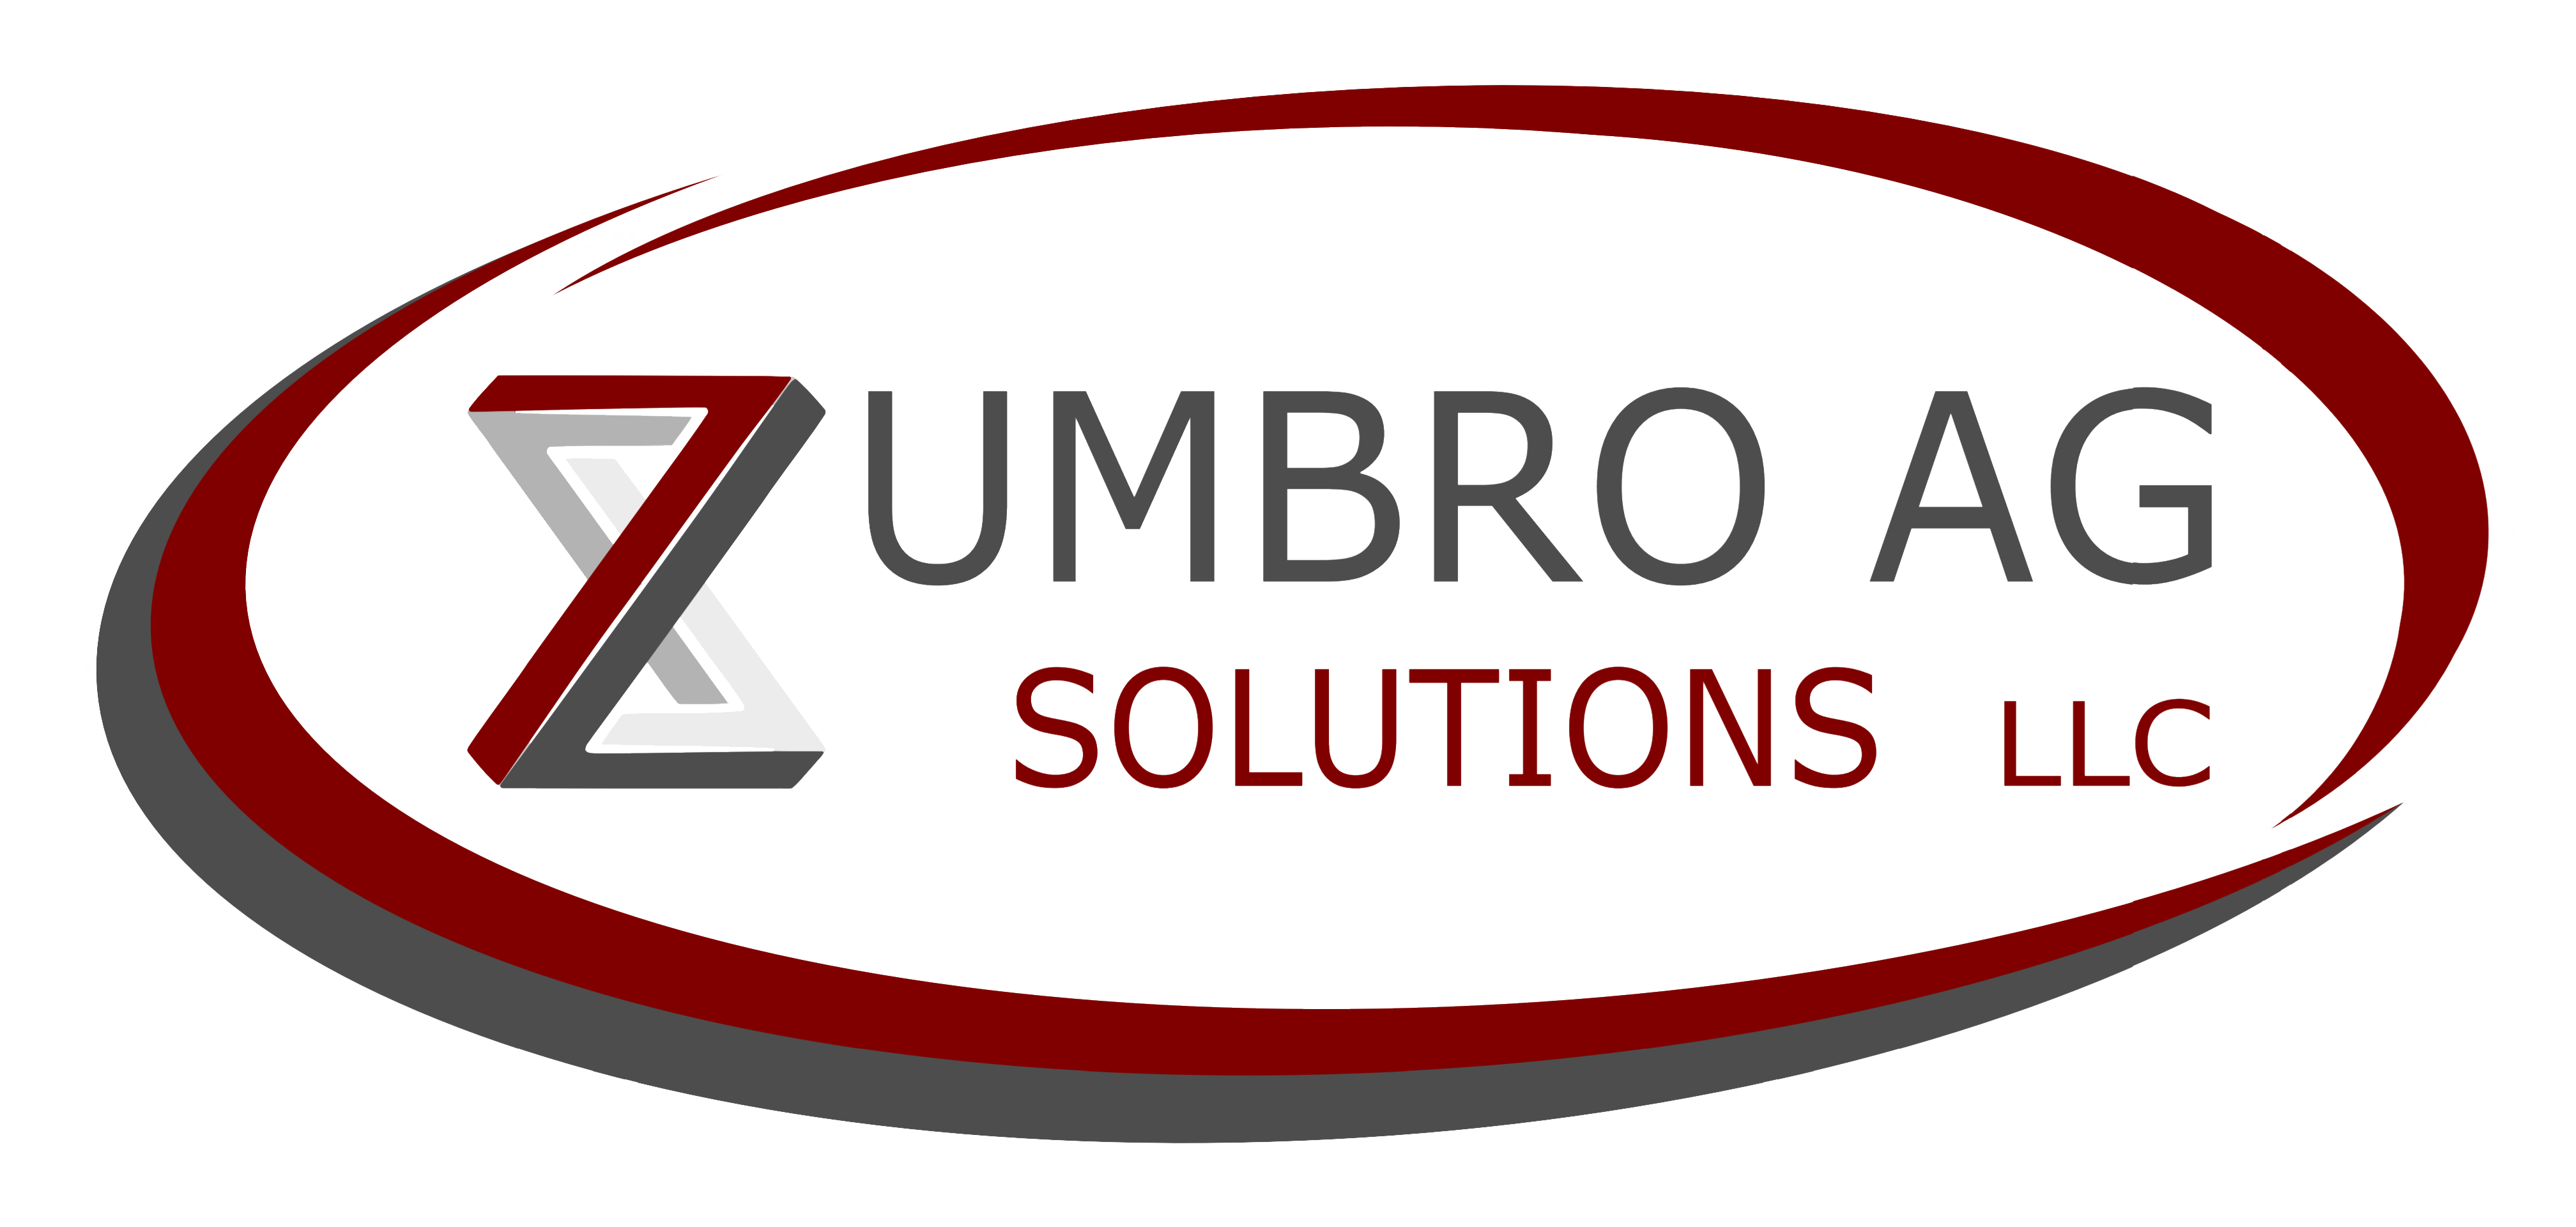 Zumbro Ag Solutions LLC